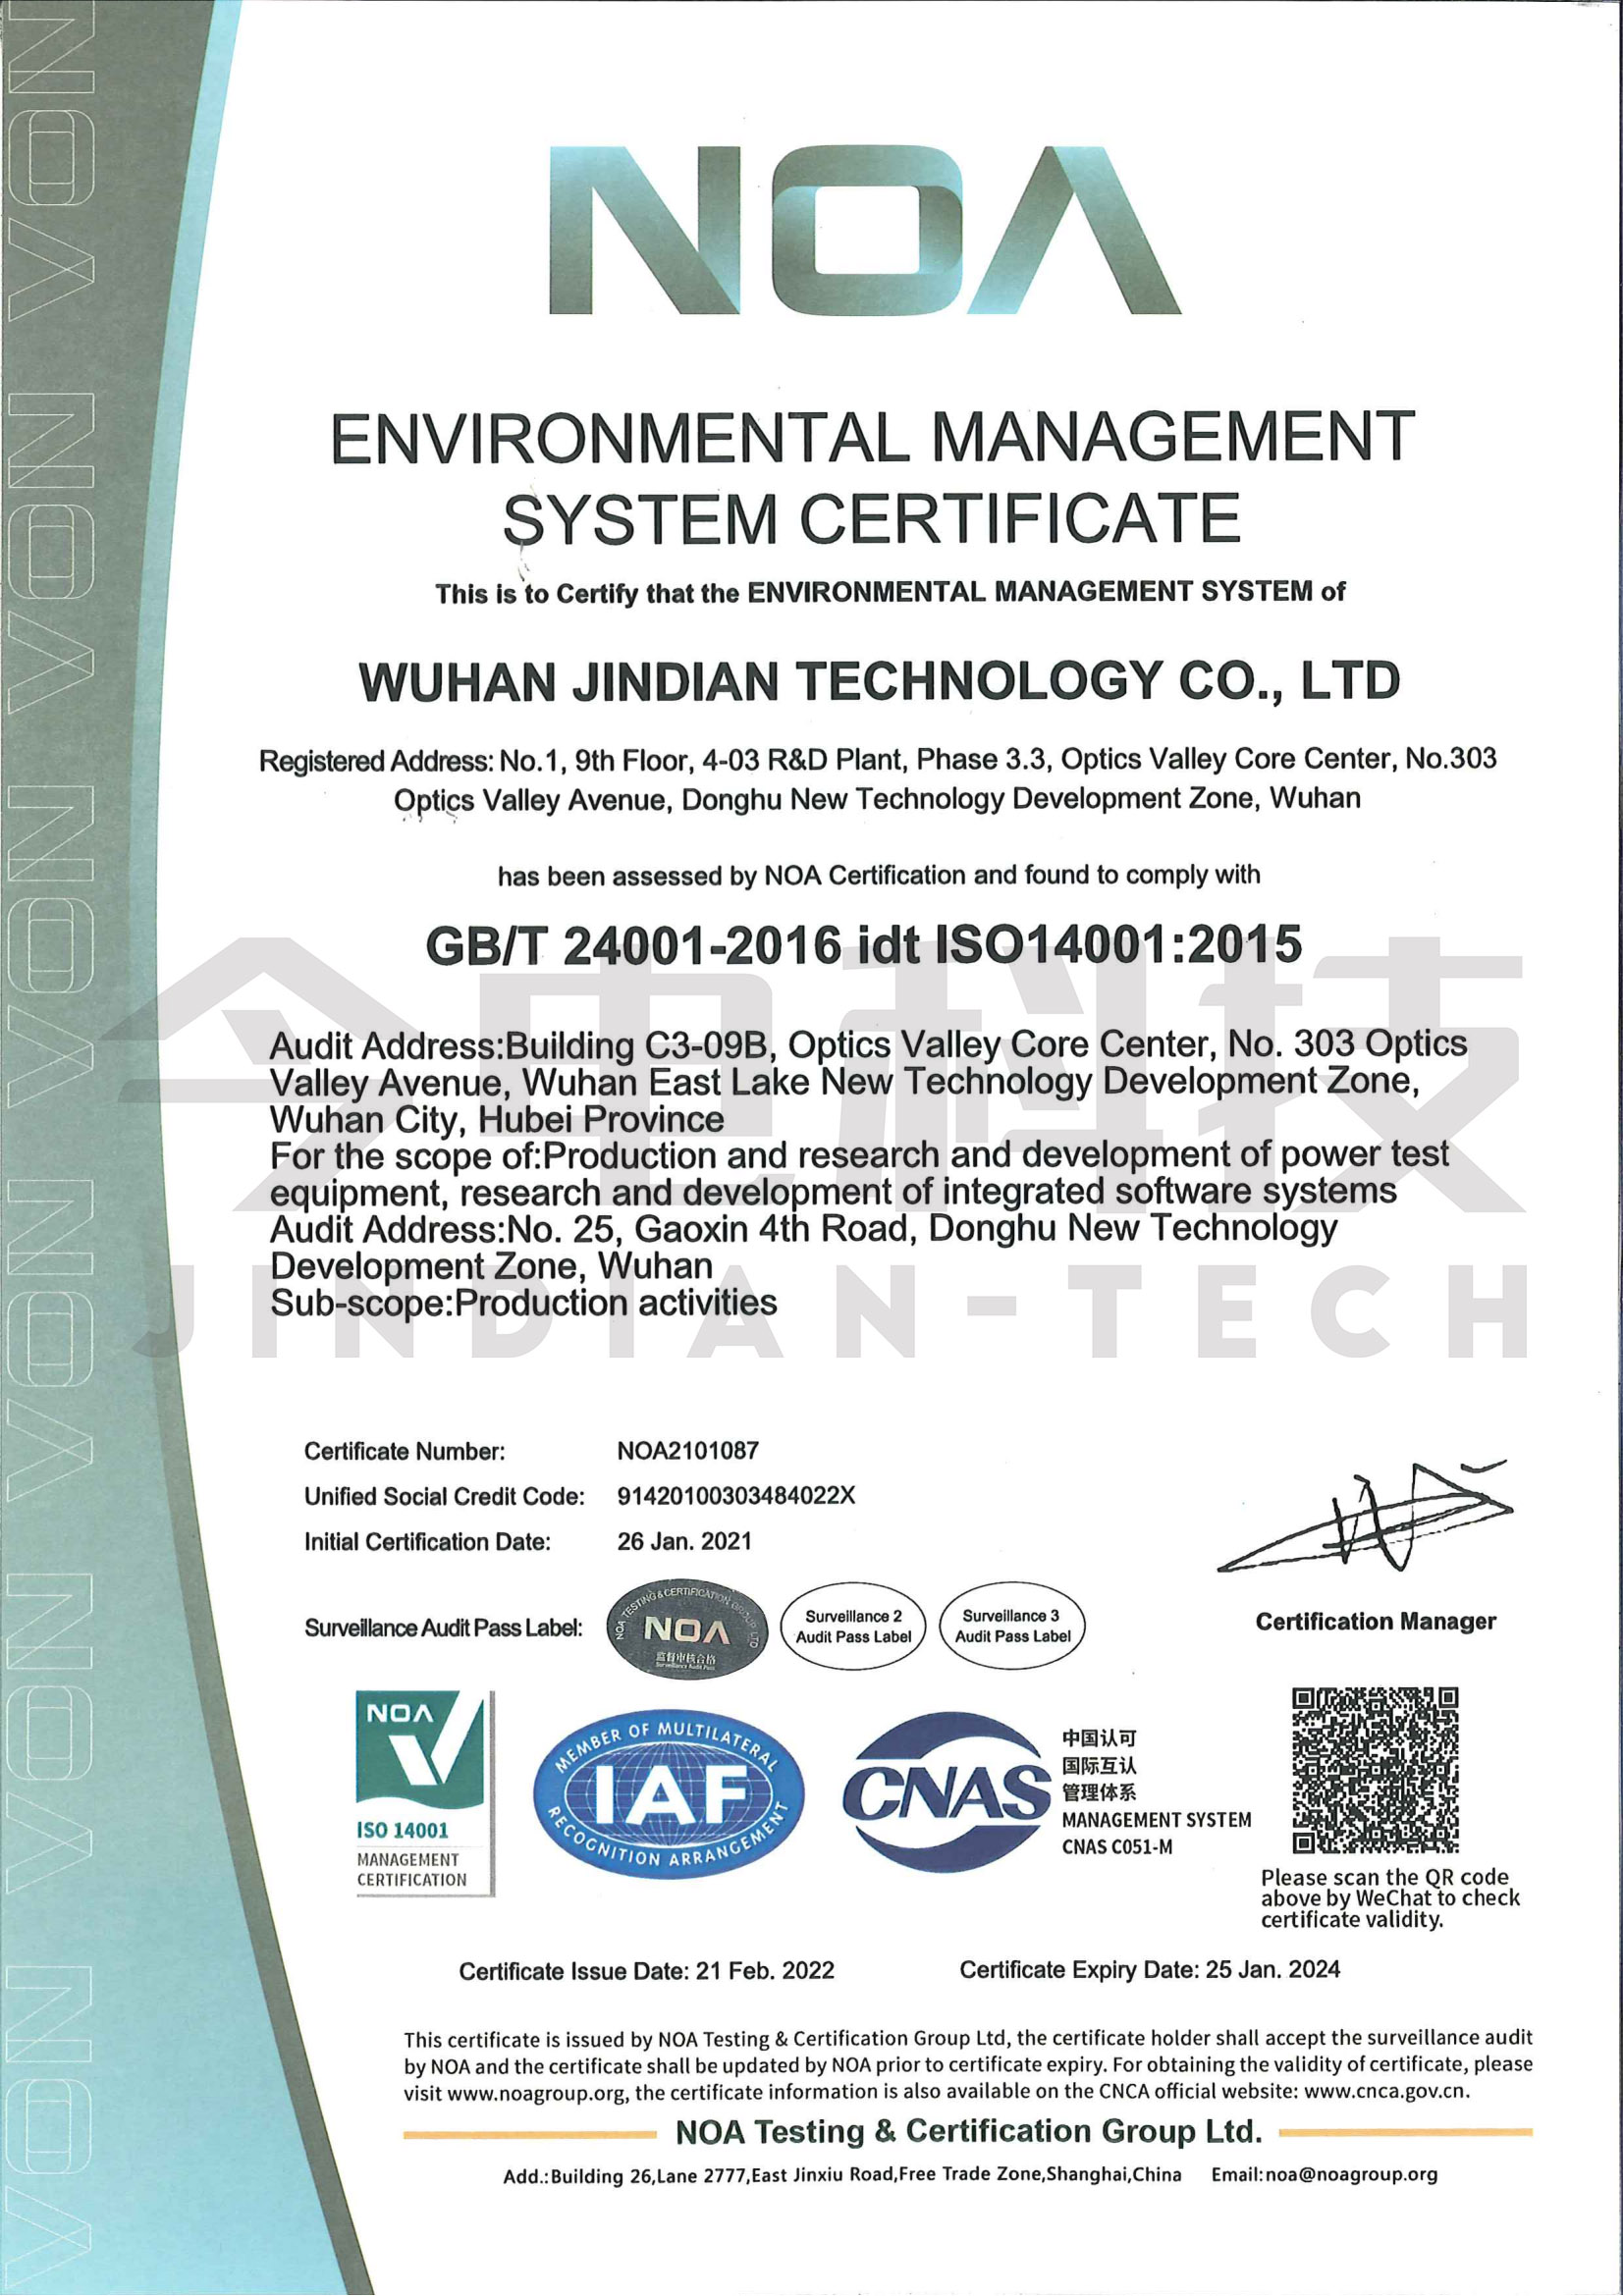 Environmental Management System Certificate (English Version)